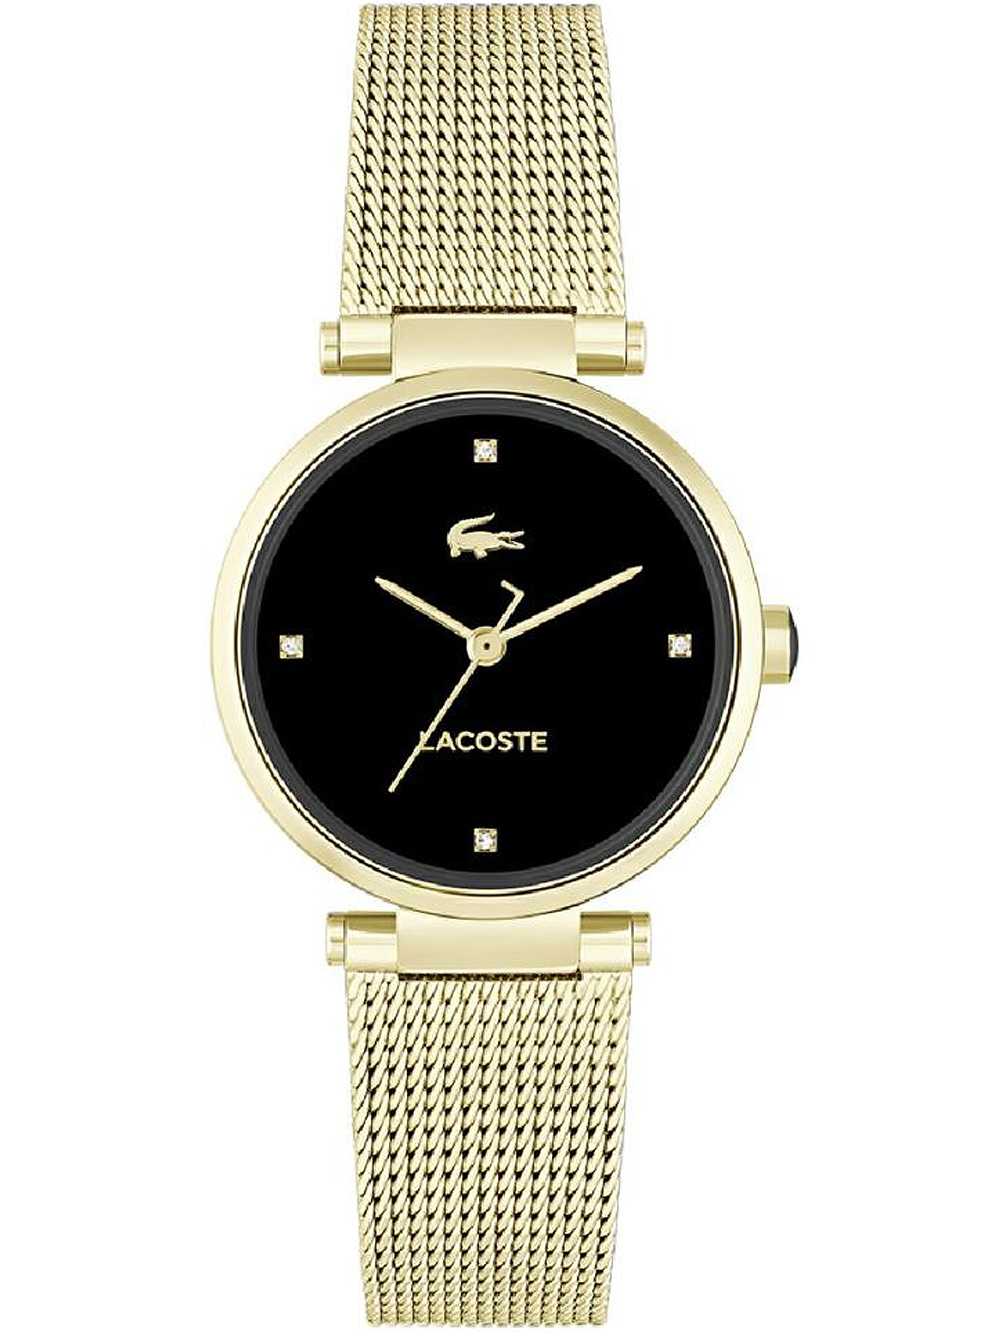 Reloj Lacoste Geneva para mujer 2001142